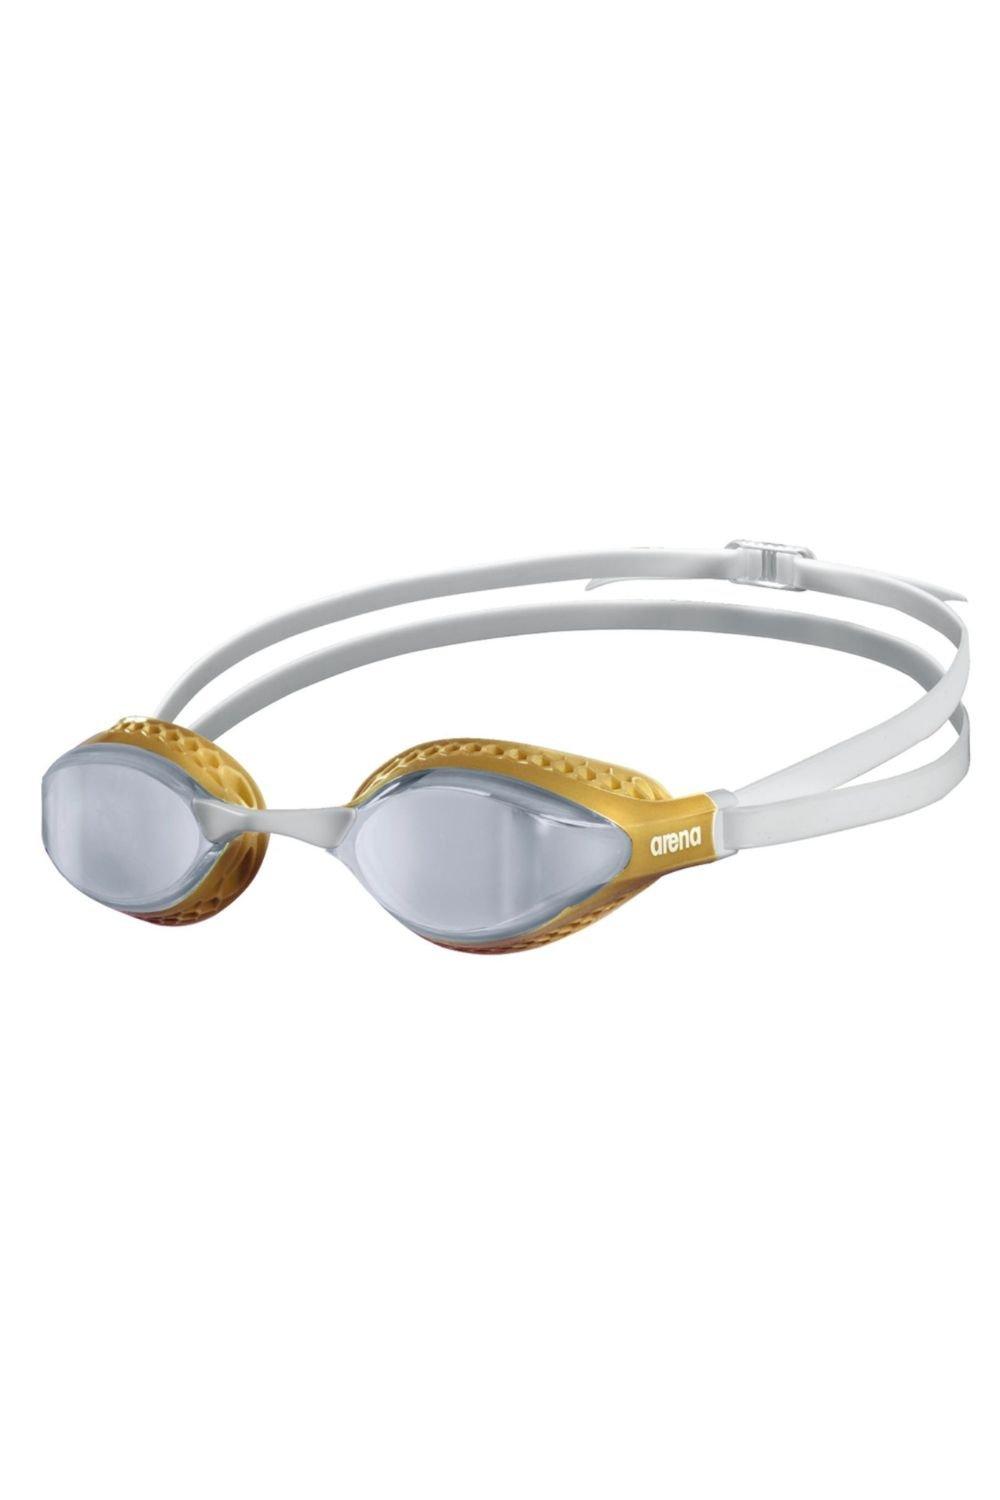 Очки для плавания с зеркалом Airspeed Arena, золото очки для плавания по рецепту 1 0 9 0 водонепроницаемые противотуманные очки для плавания силиконовые очки для плавания с диоптриями очки д